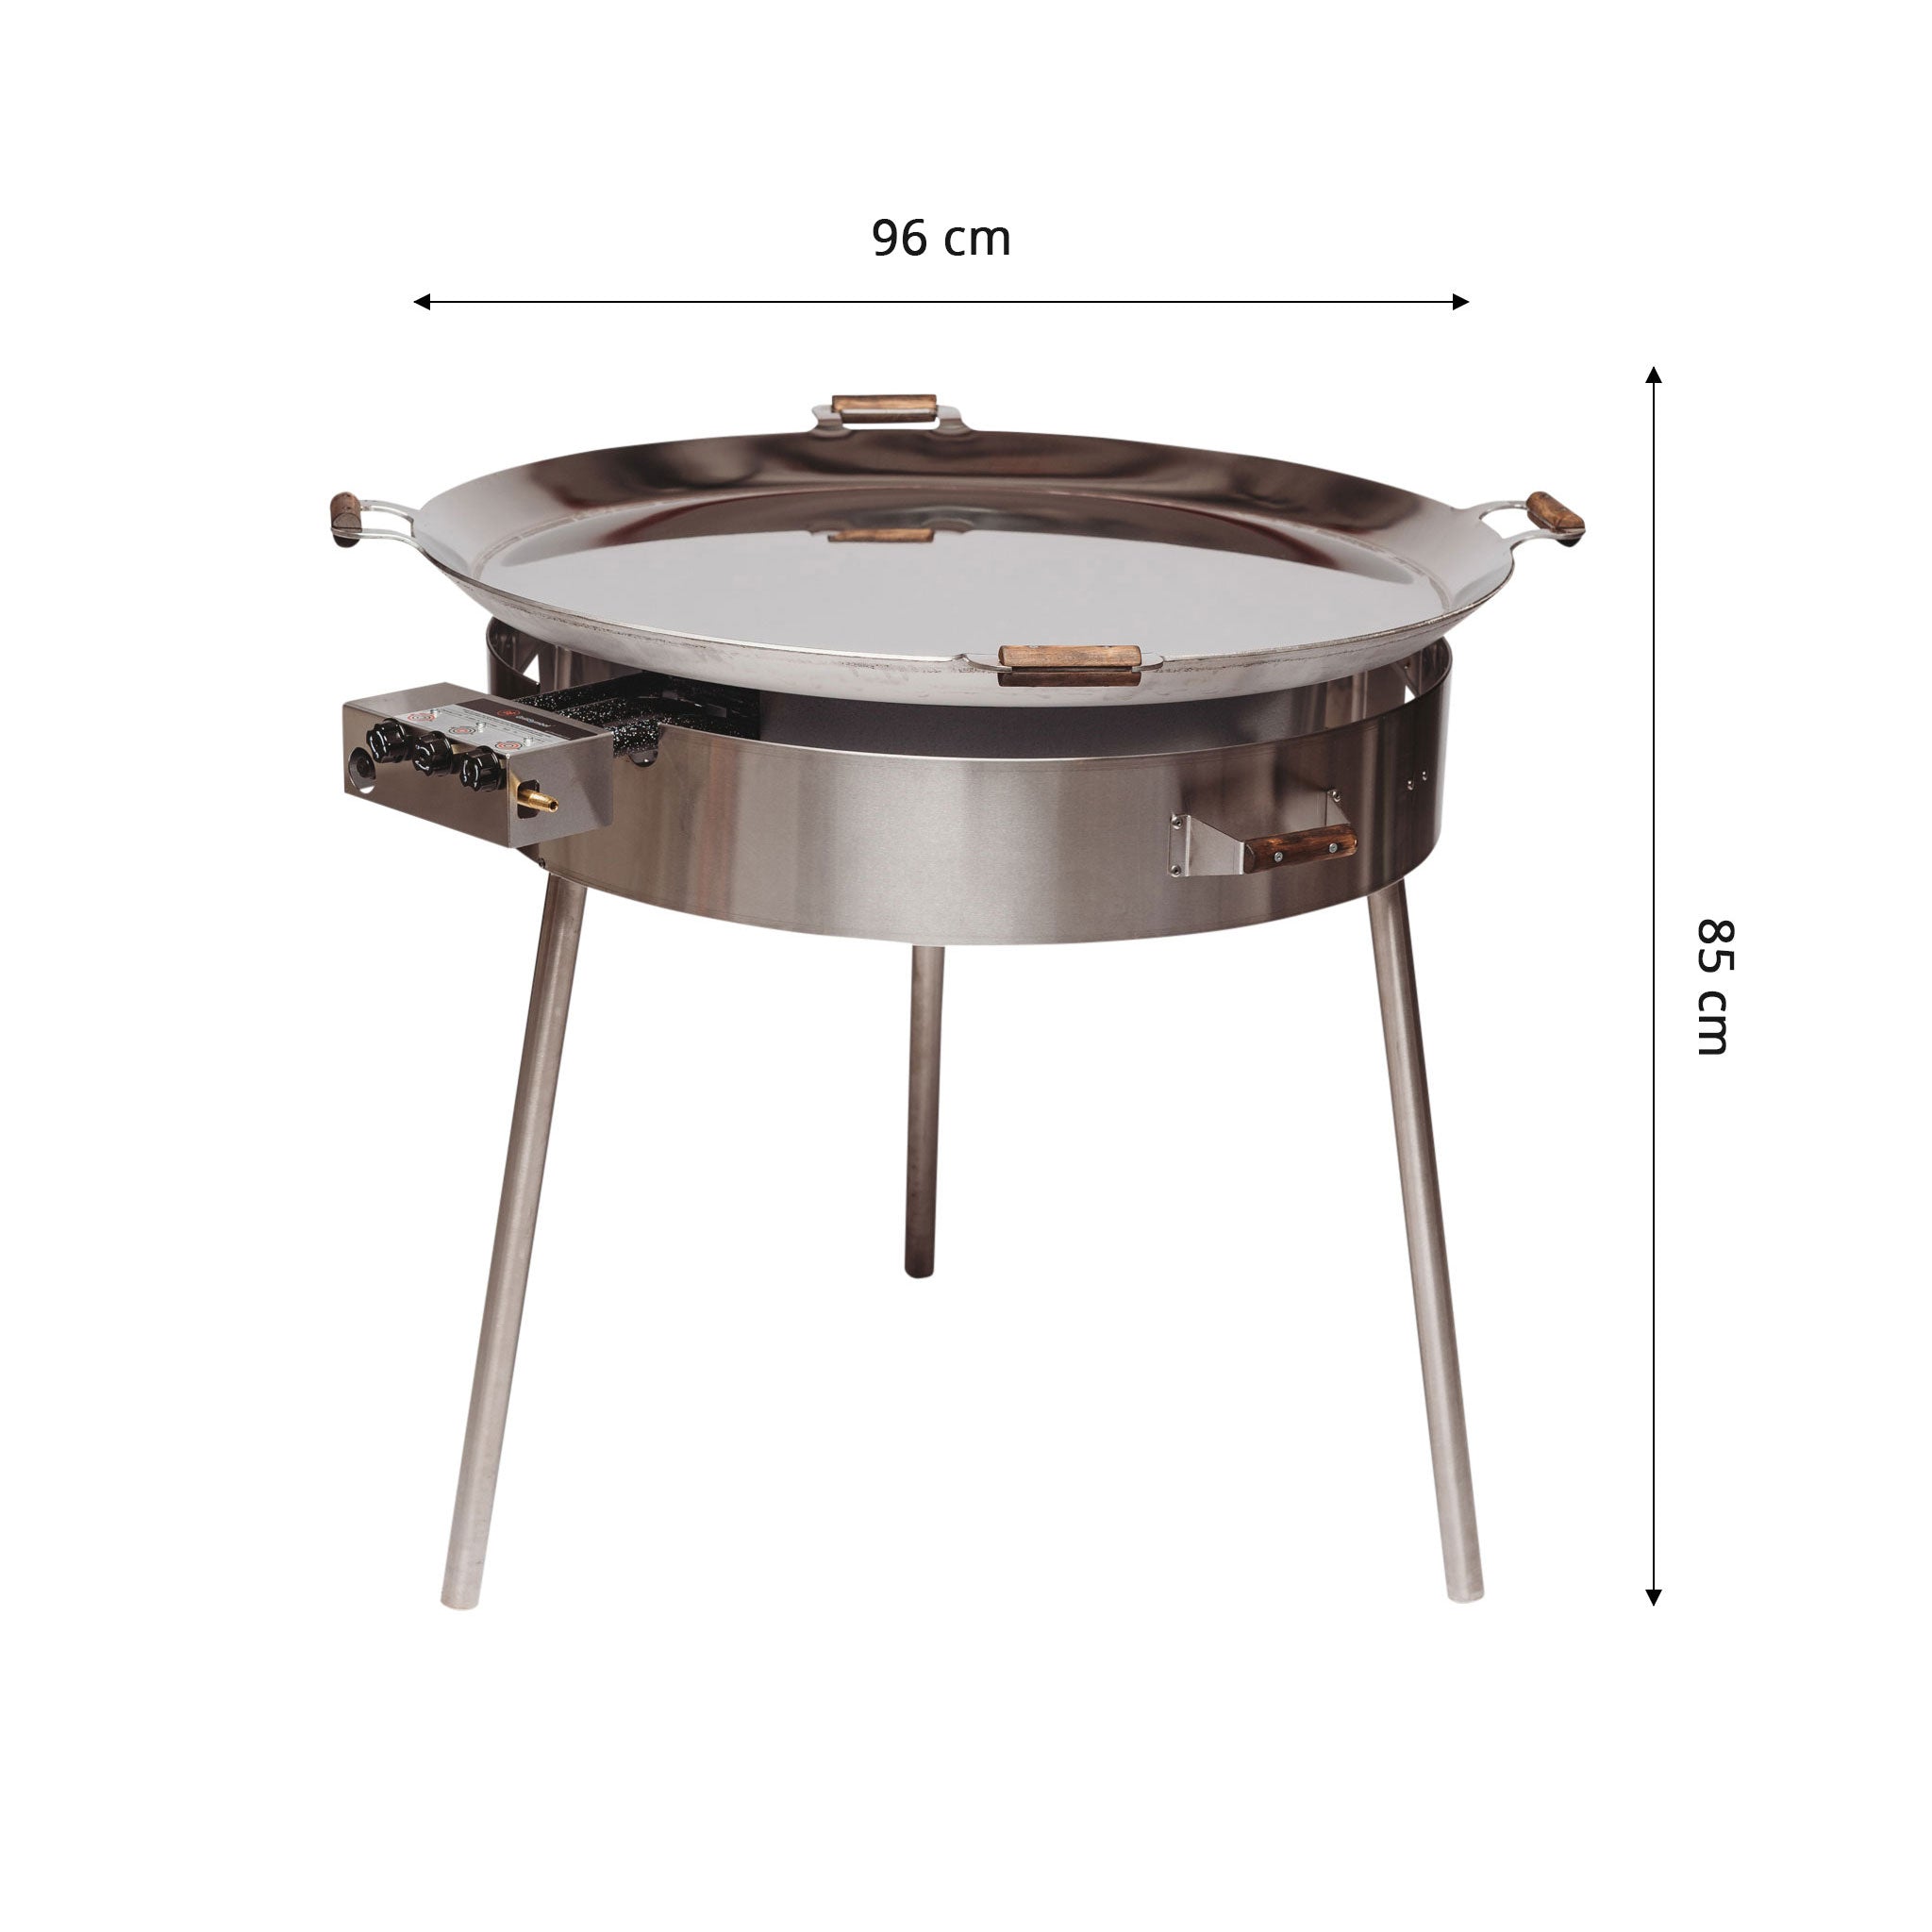 GrillSymbol Paella Cooking Set PRO-960 inox, ø 96 cm
(pan 5 mm stainless ø 96, gas burner ø 60 cm)